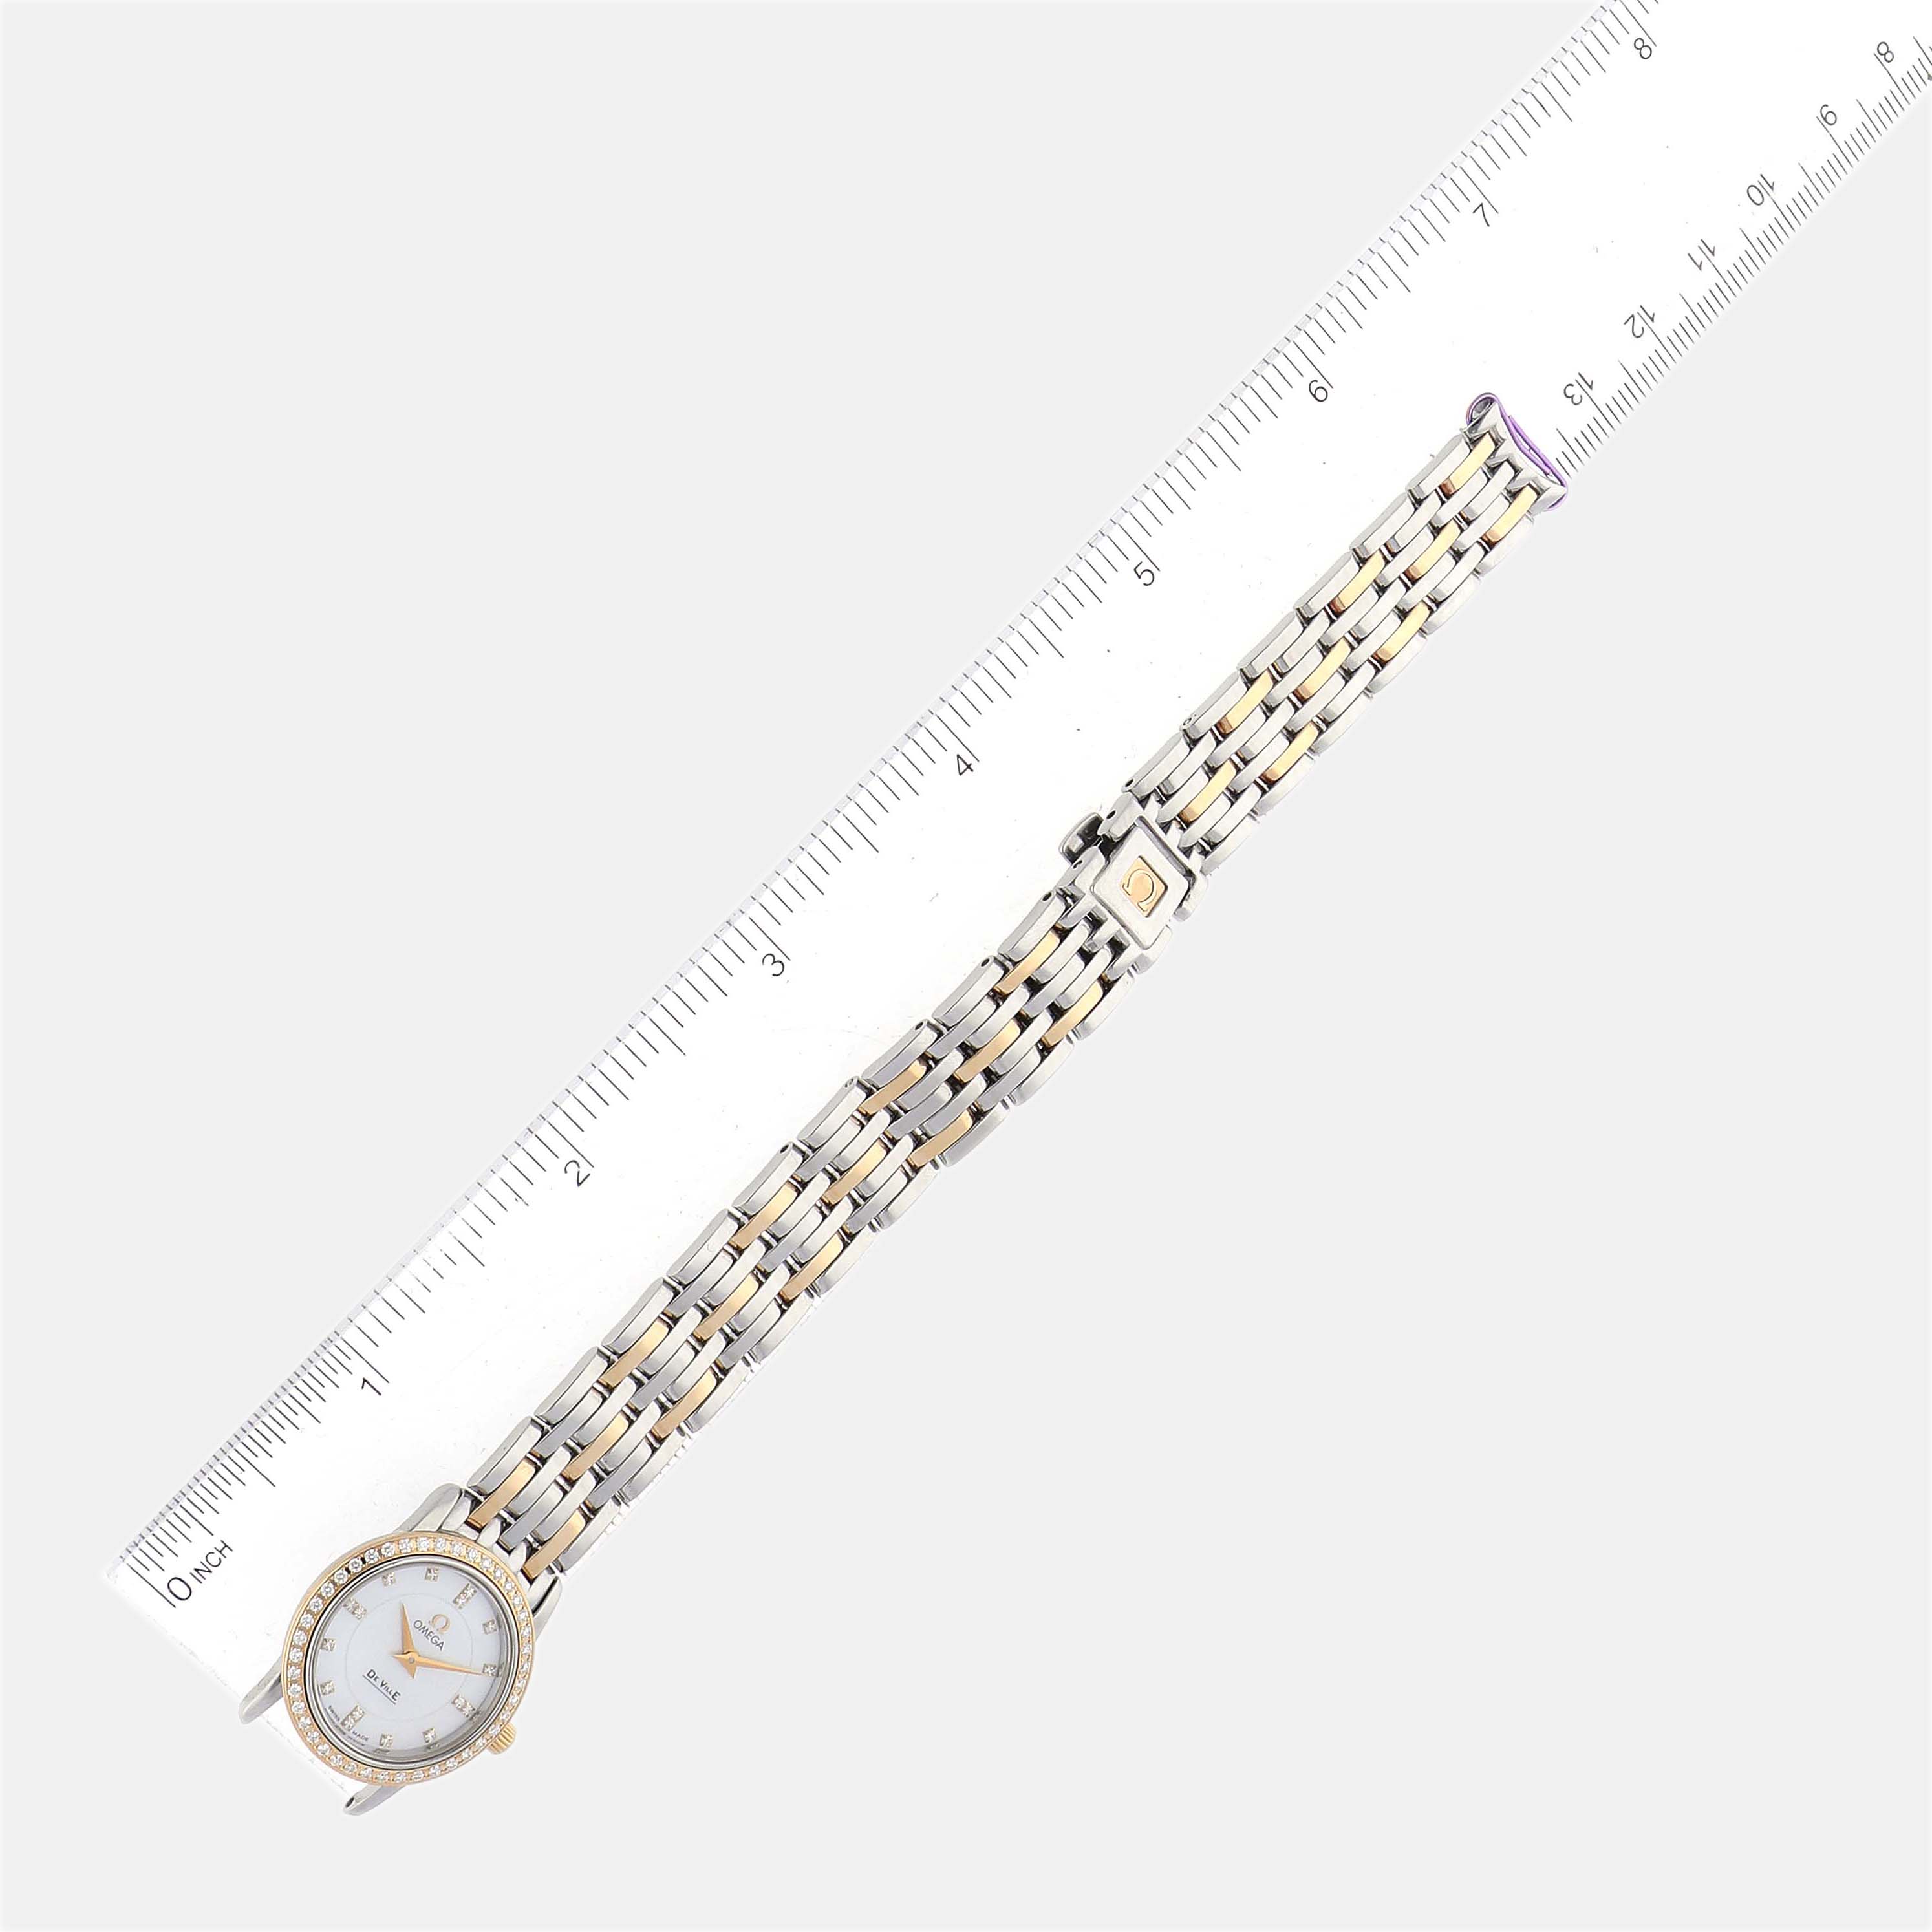 Omega Blue Diamond 18k Rose Gold And Stainless Steel Constellation 123.25.24.60.53.001 Quartz Women's Wristwatch 24 Mm